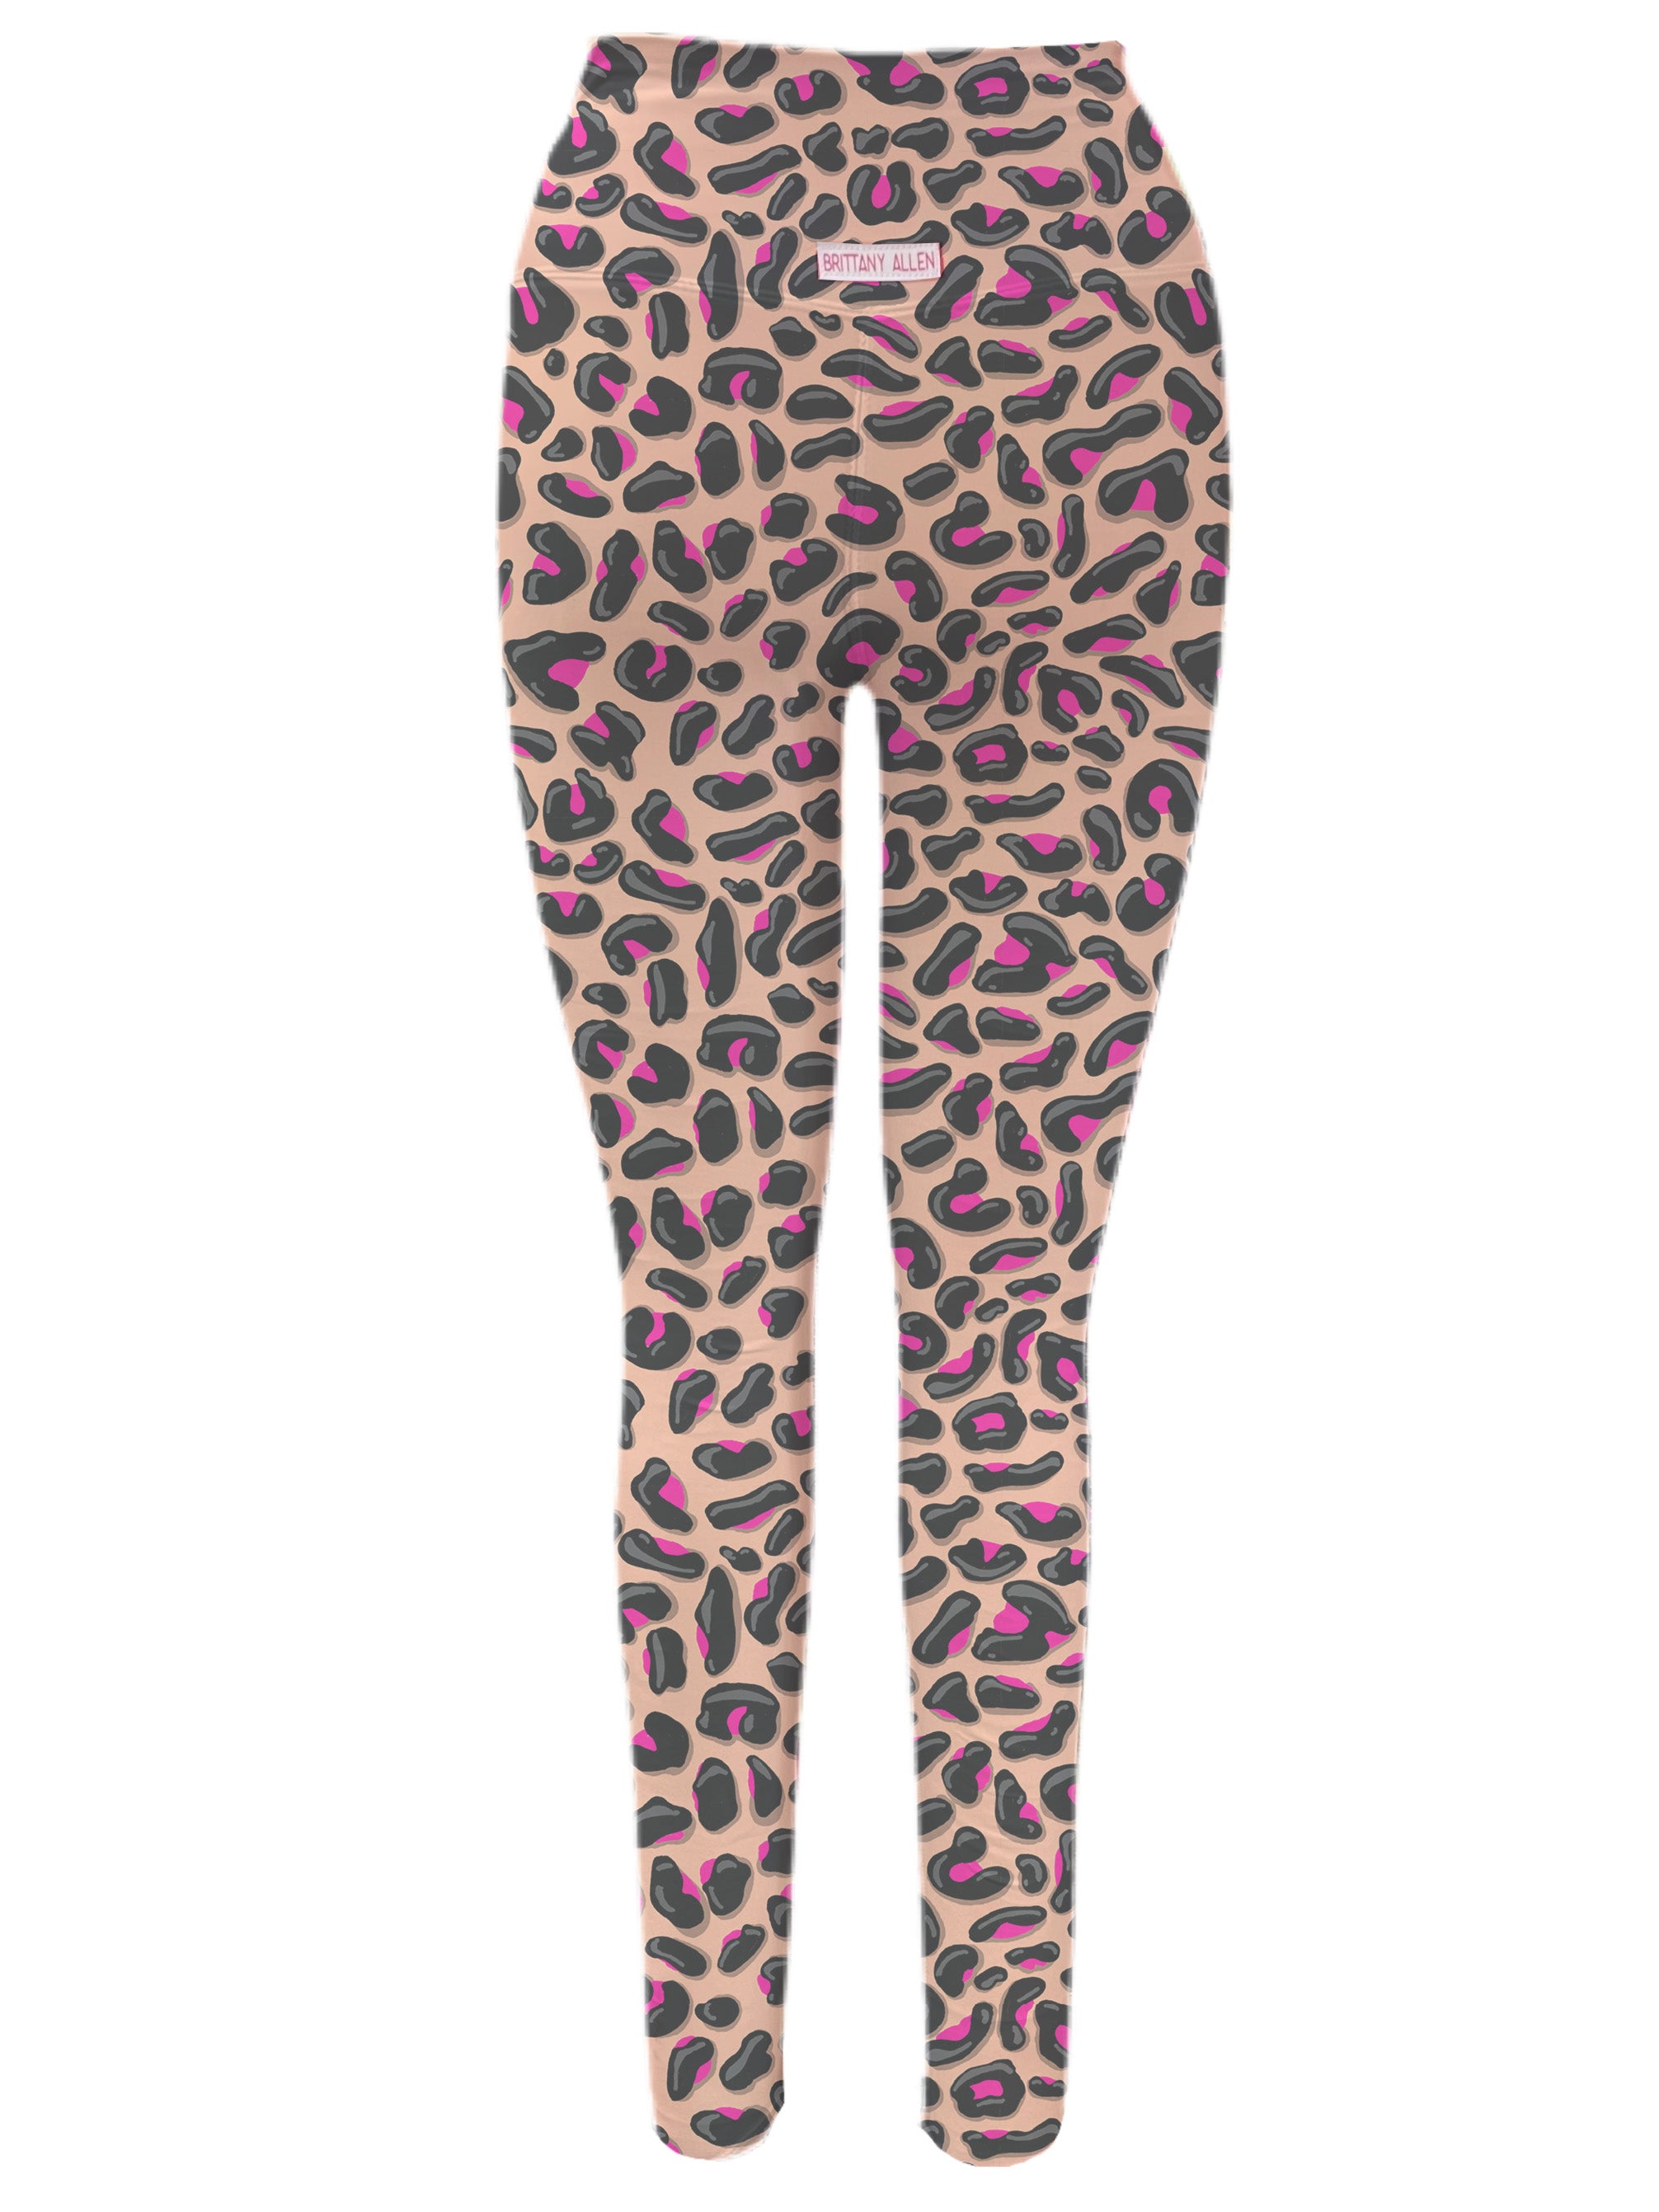 Pink Leopard Leggings – Brittany Allen